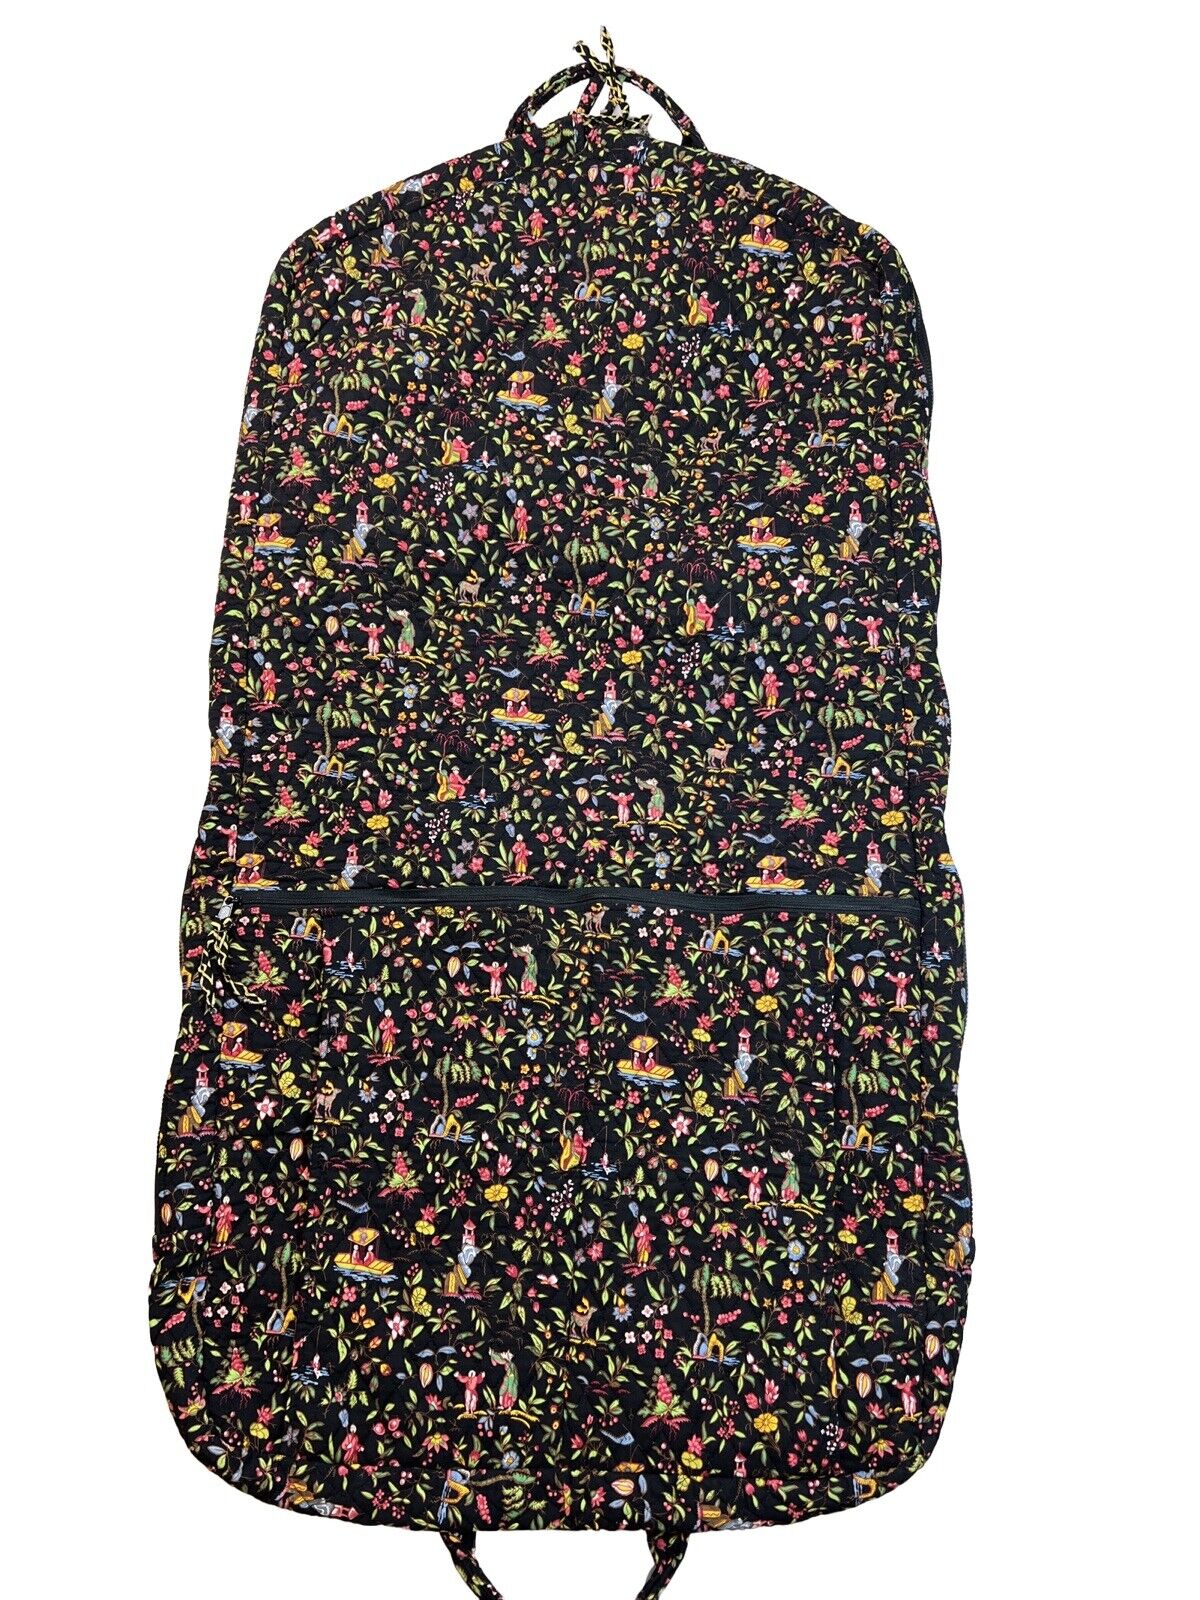 Vera Bradley Women's Black Floral Quilted Garment Bag